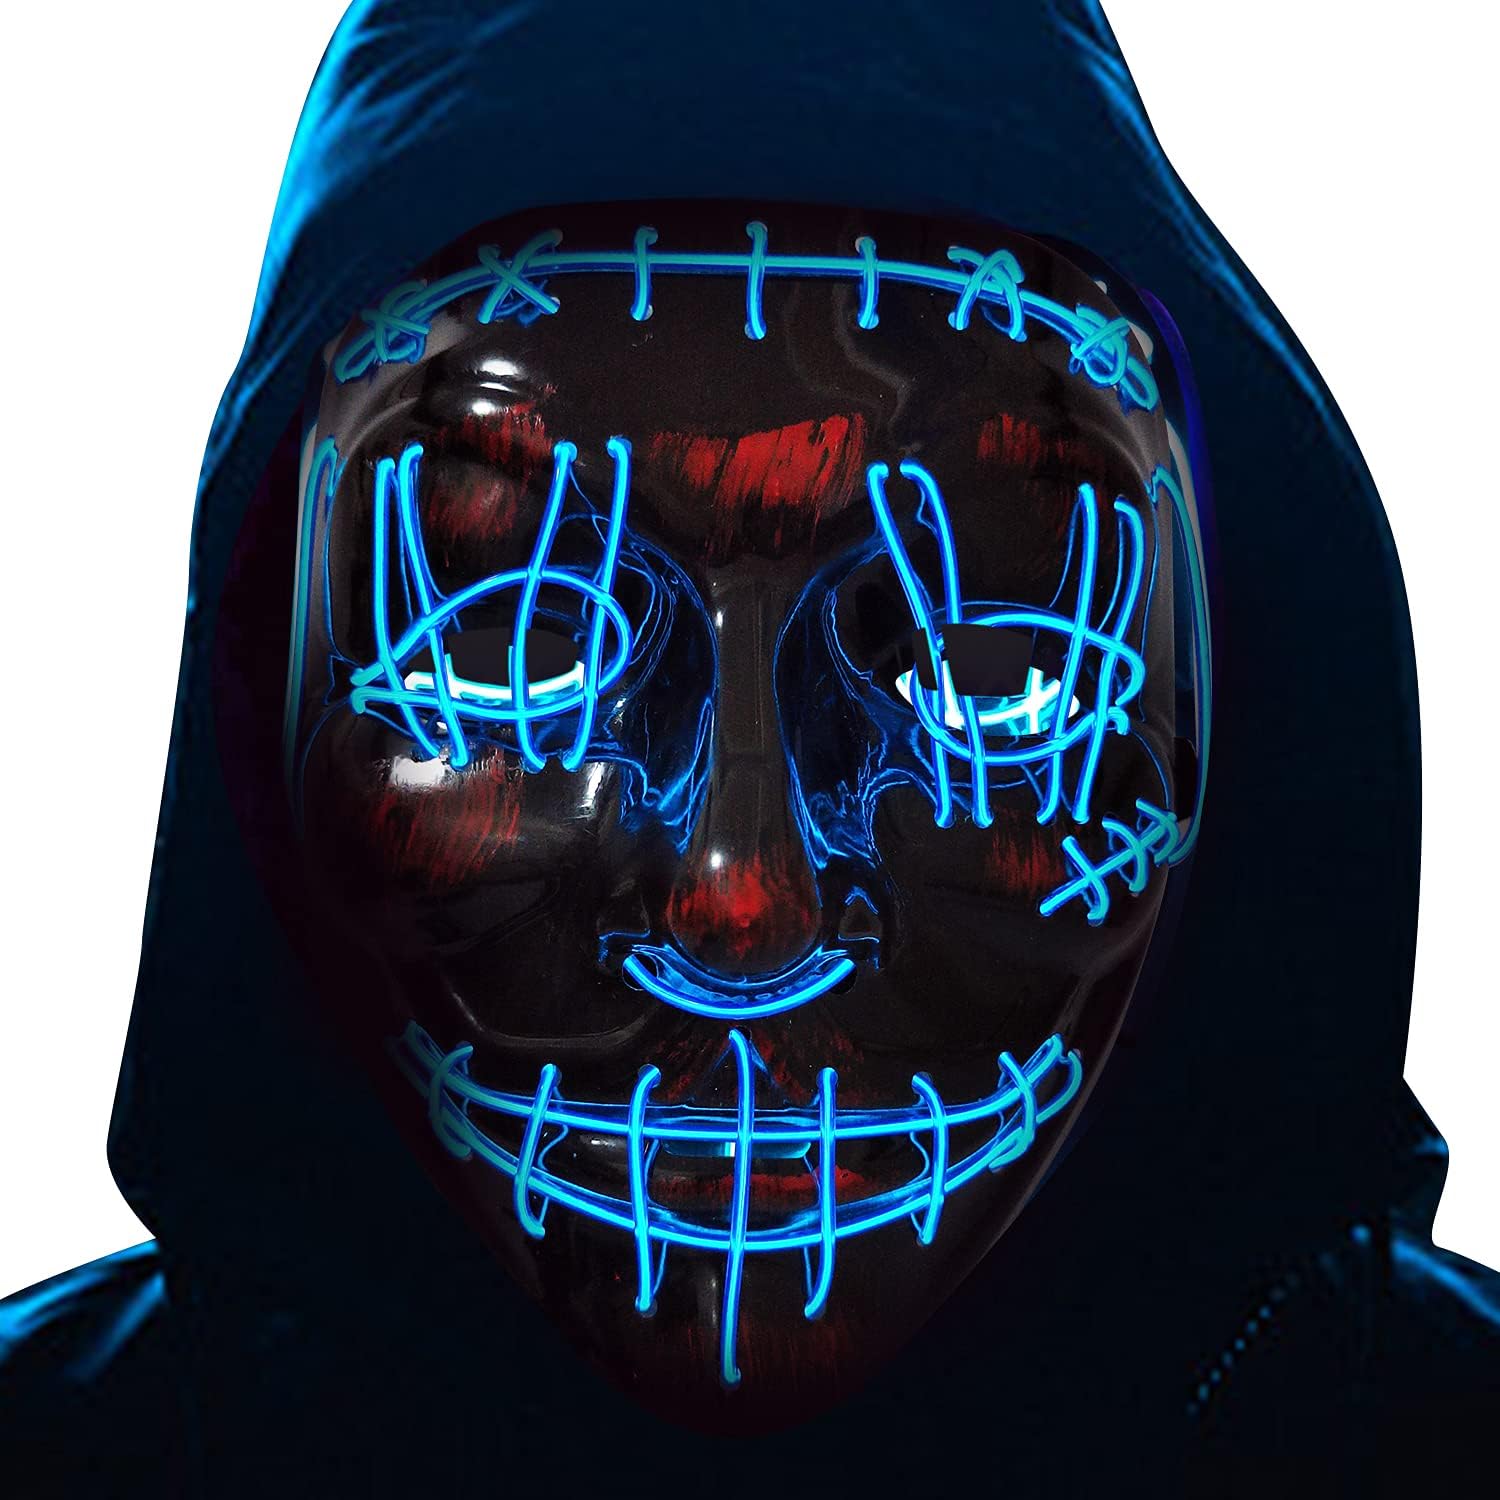 SparkGlow Smart LED Mask